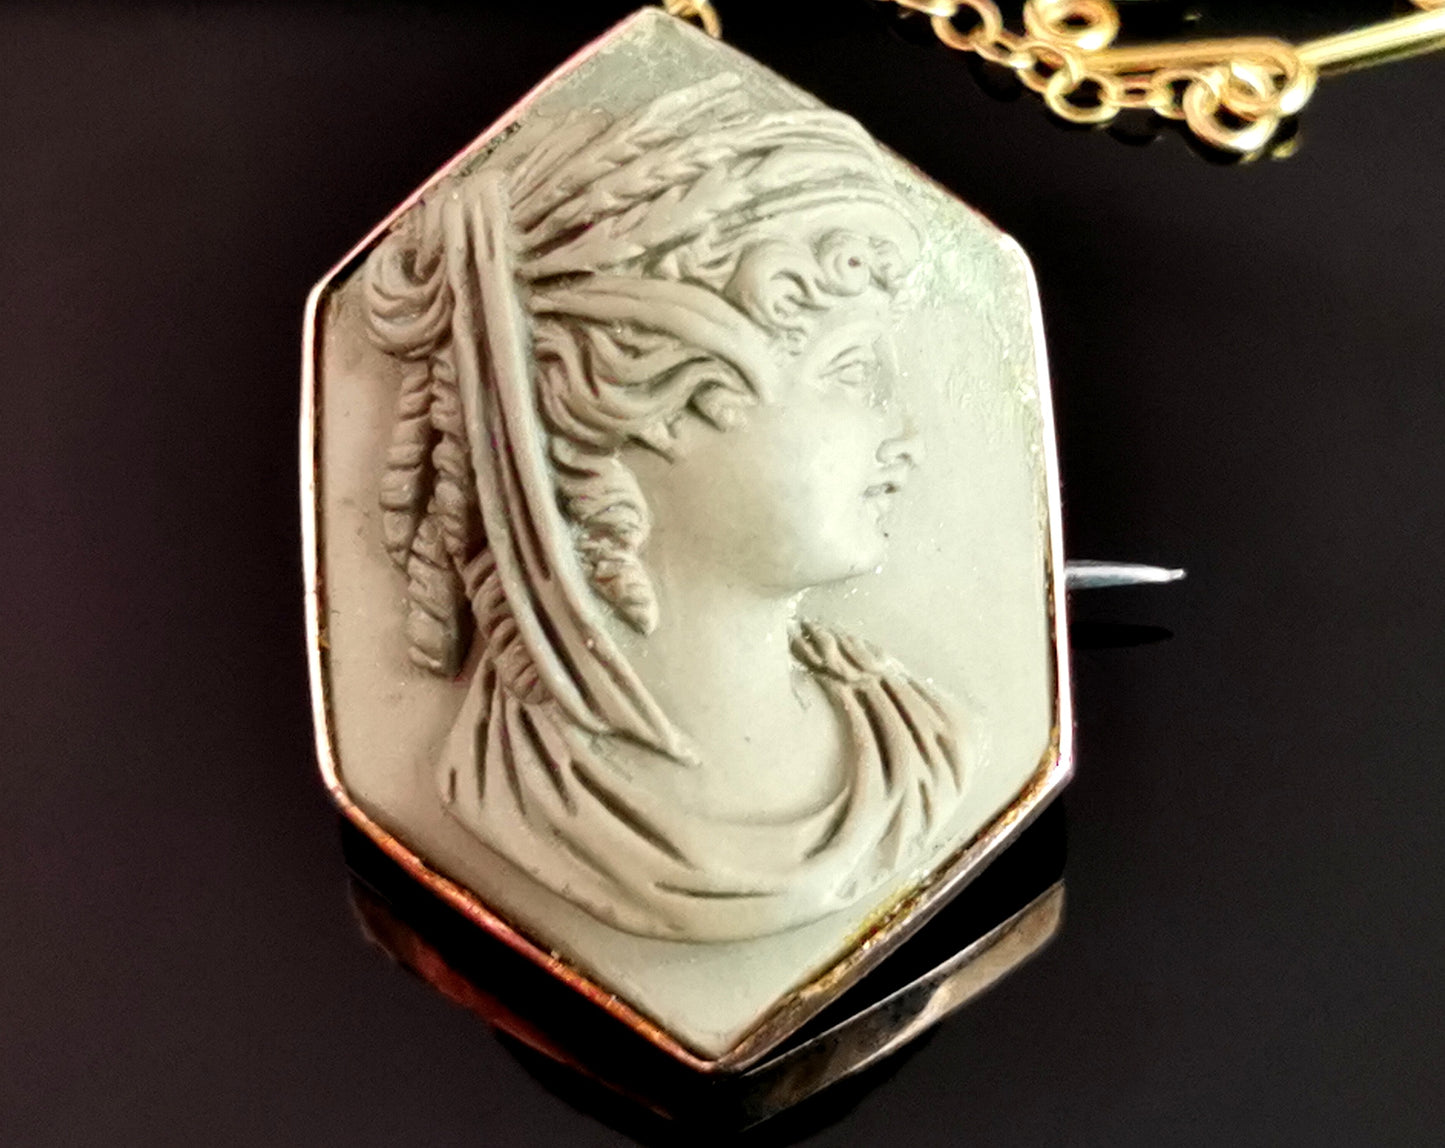 Antique Victorian Lava Cameo brooch, 9ct gold